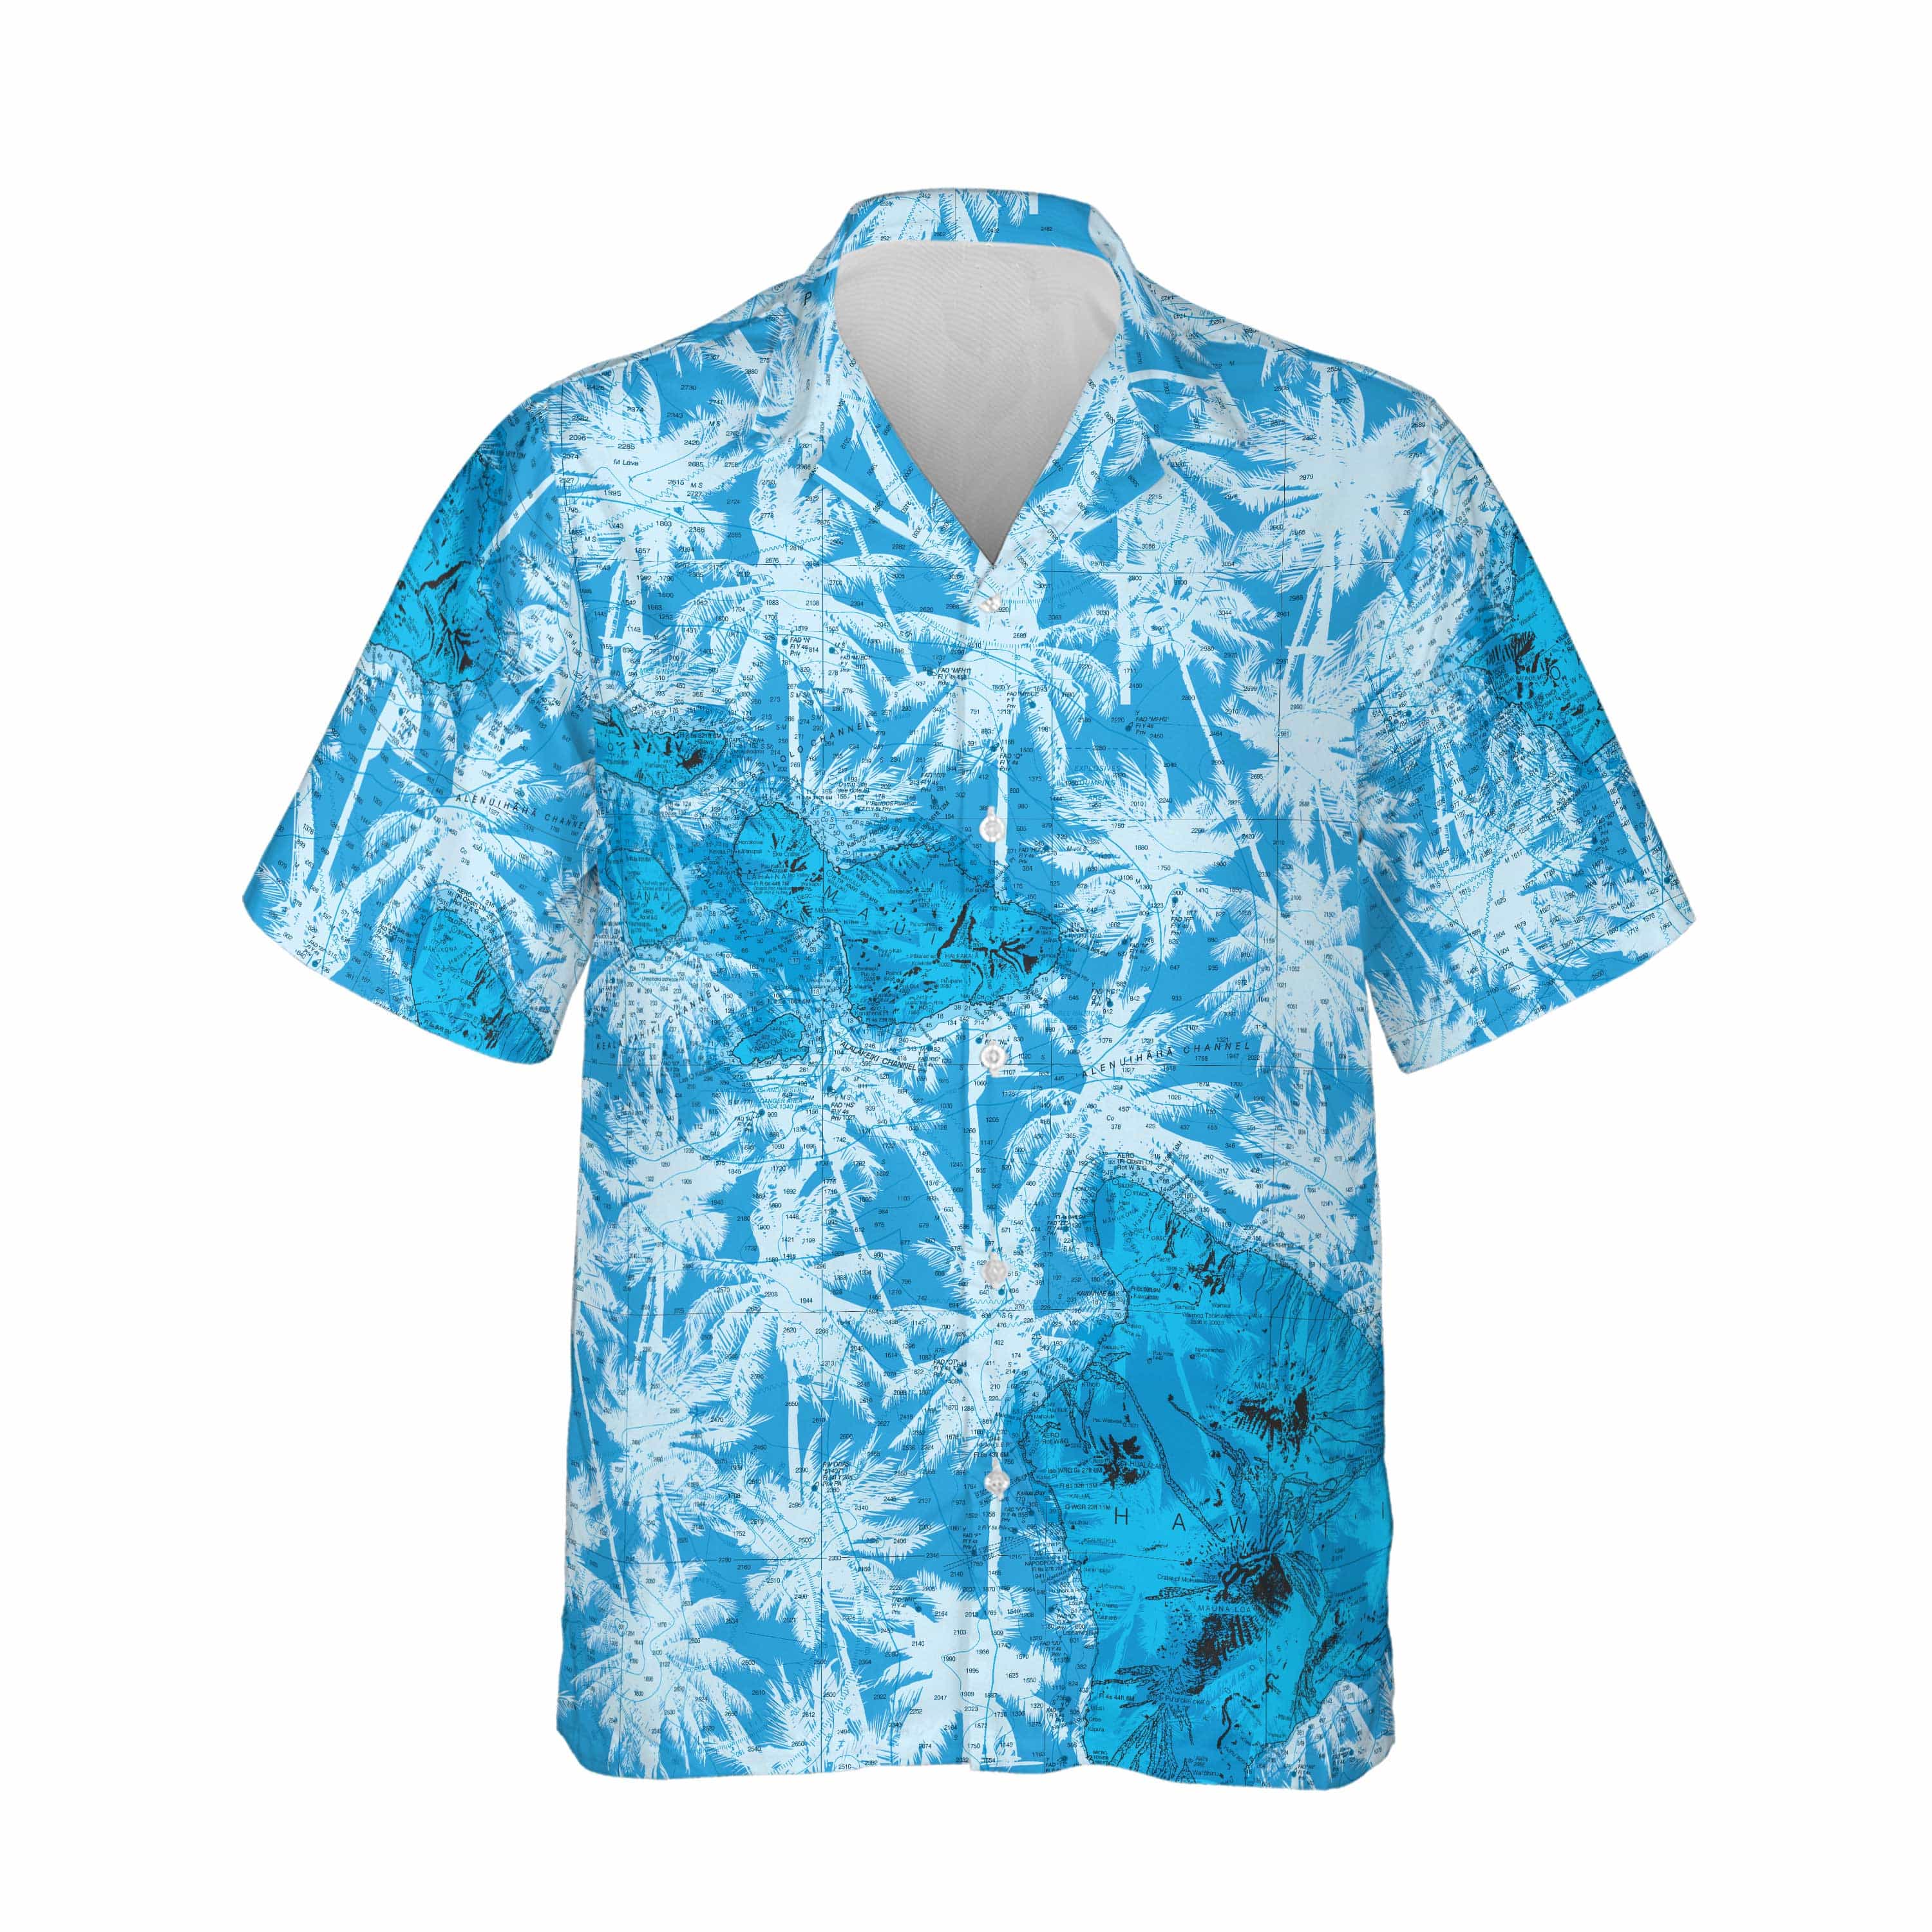 The Breezes Through Hawaii Shirt